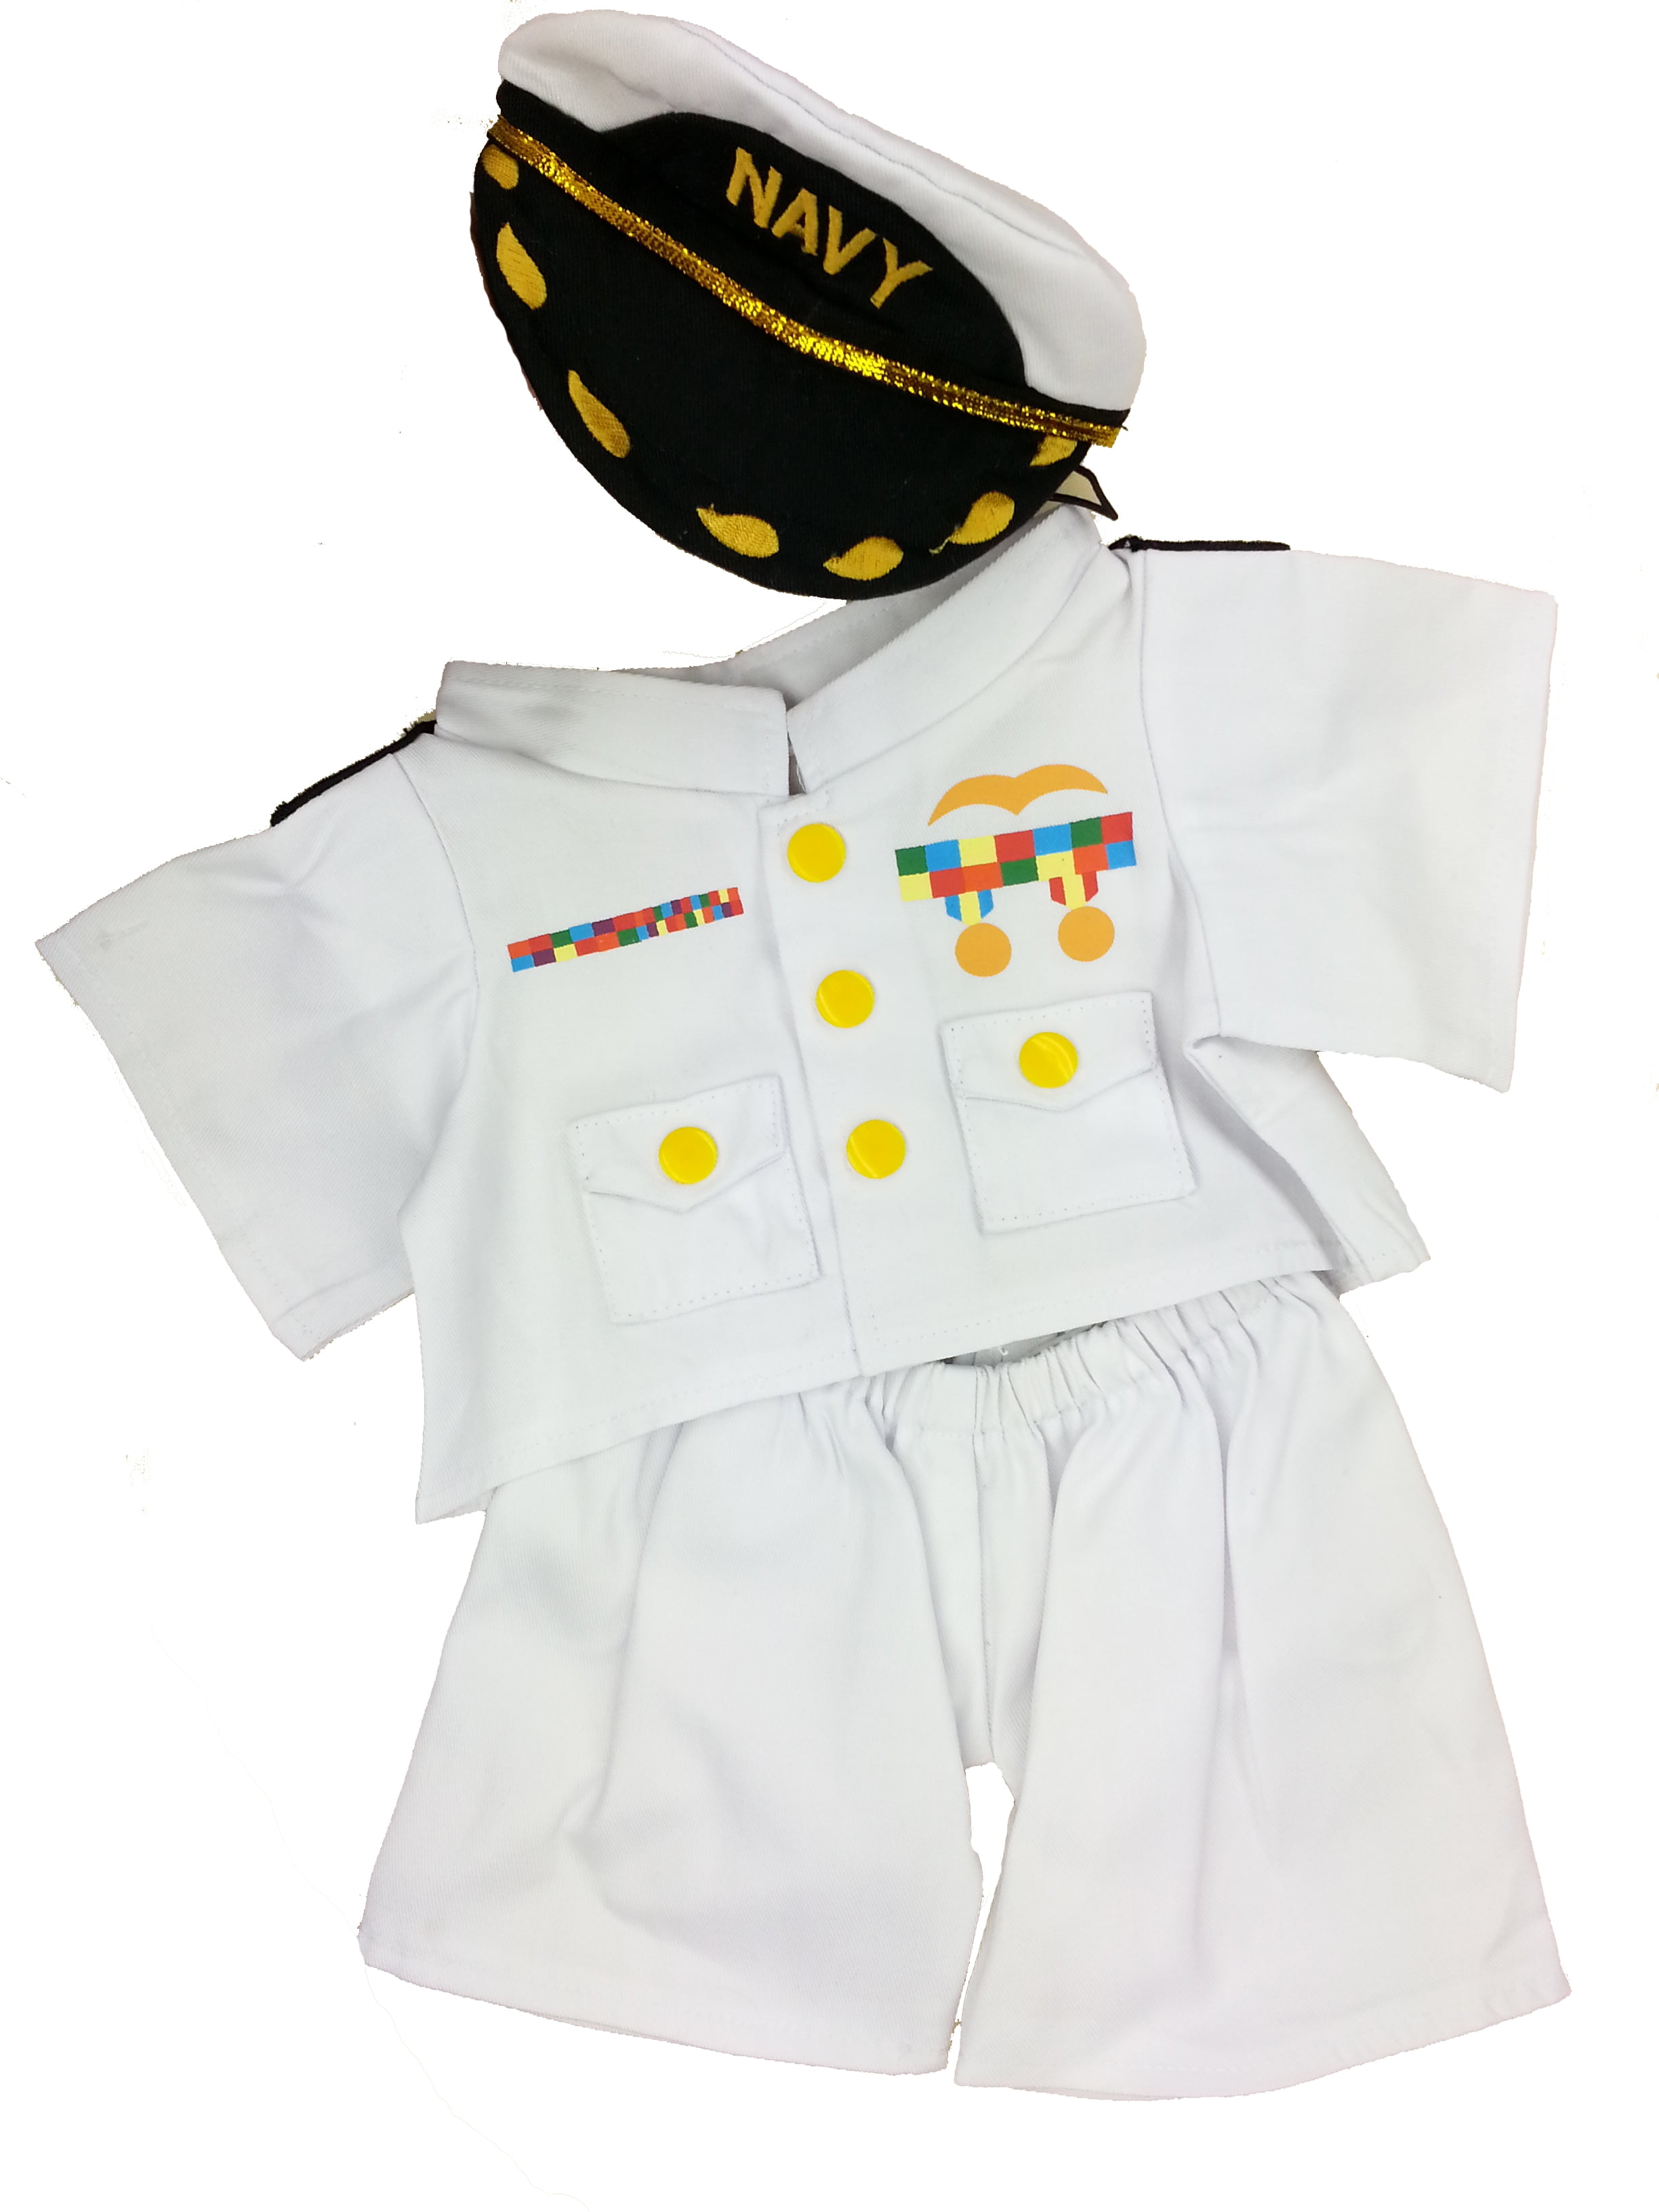 Details about   Build-A-Bear Workshop Naval Officer Uniform Teddy Bear Accessories 022616 